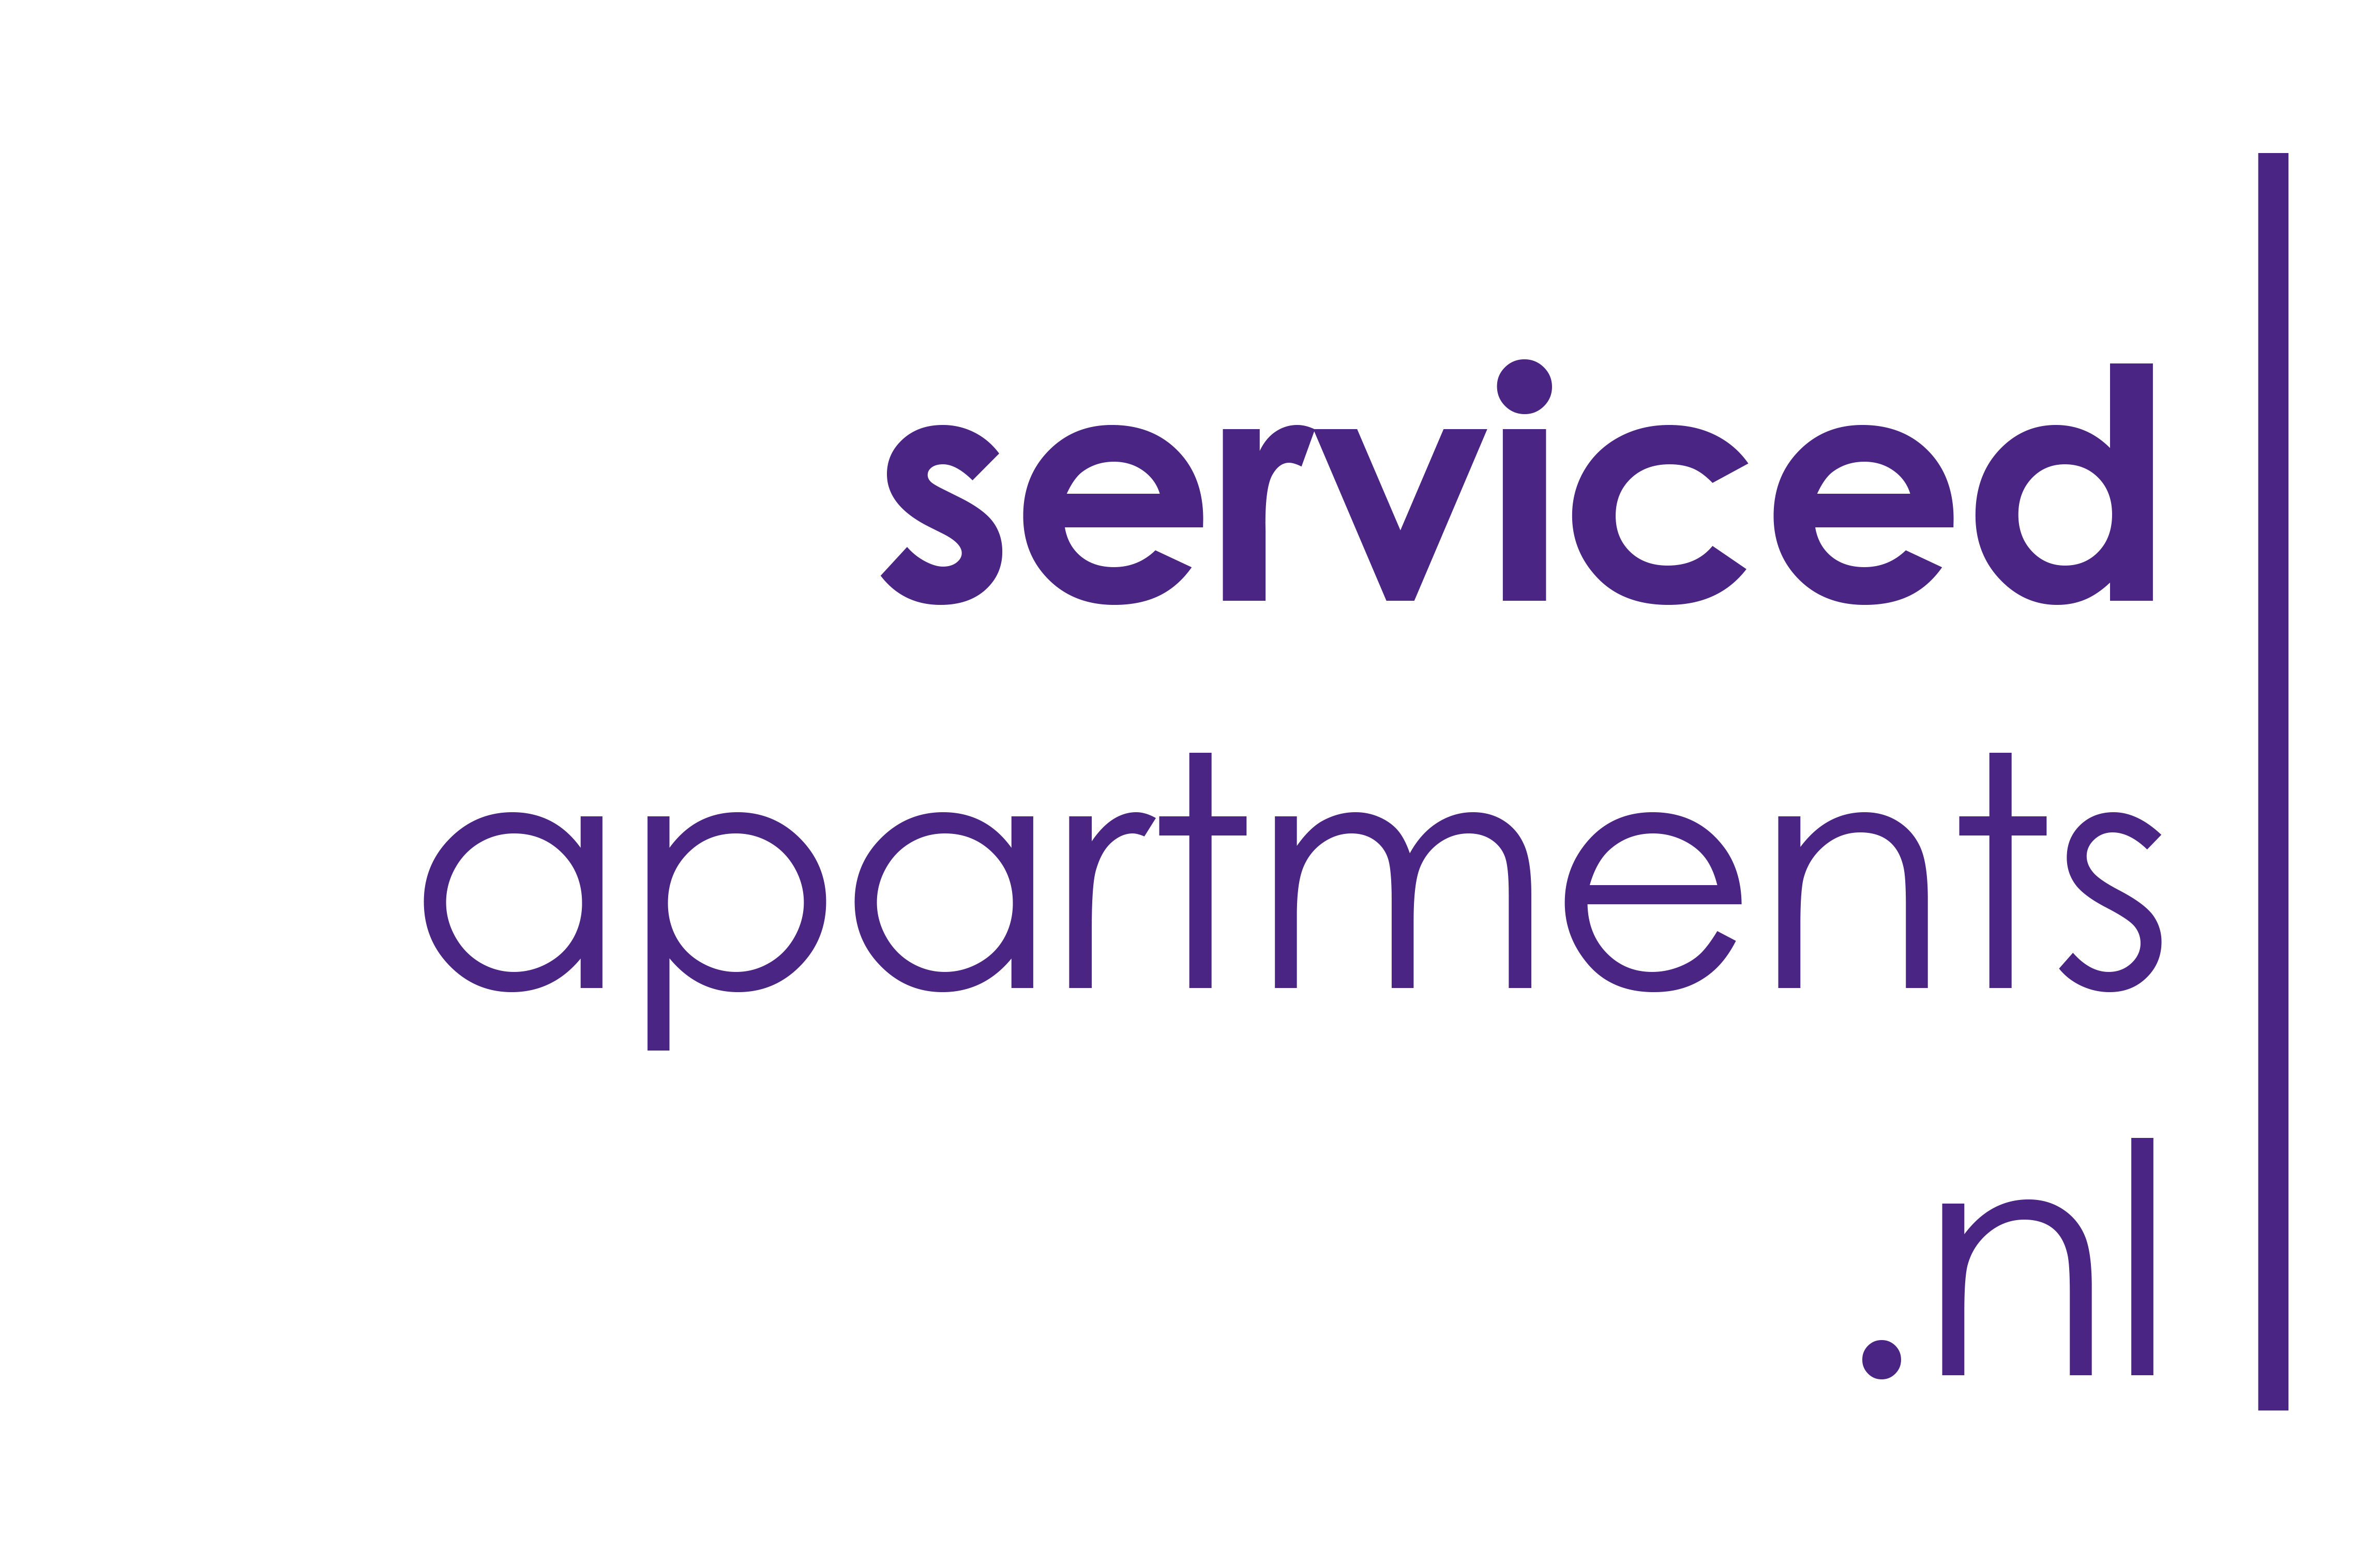 Serviced Apartments NL